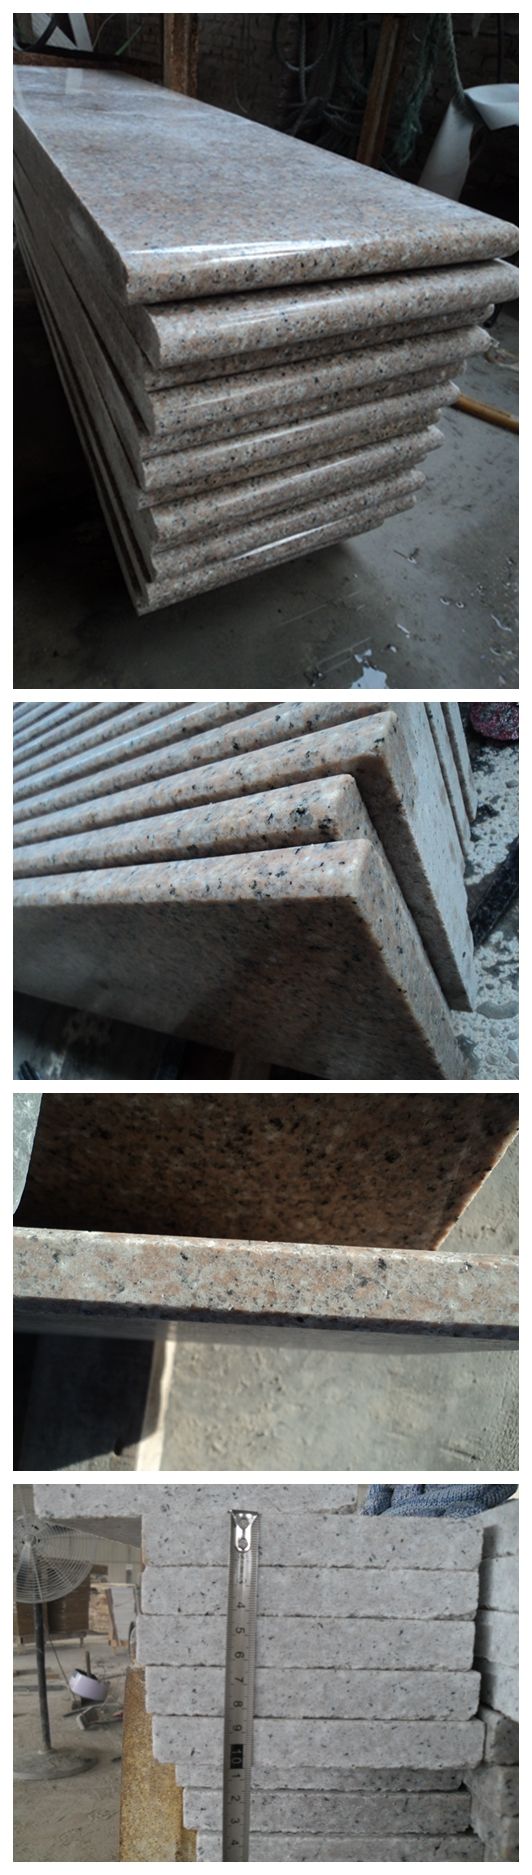 G681 china granite for building stair steps polished,edge polished2.jpg